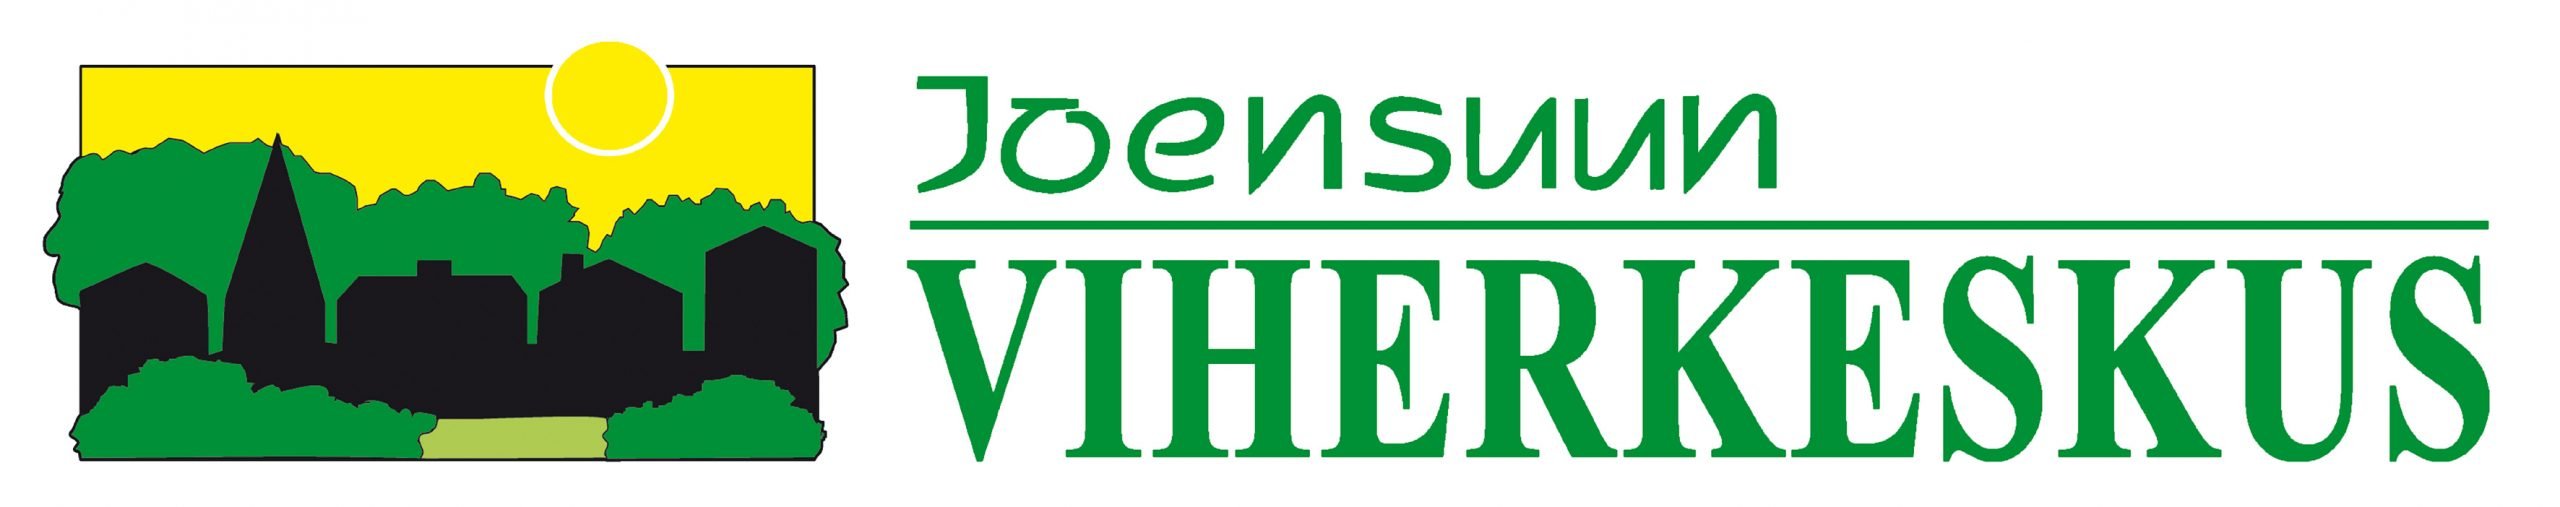 Joensuun Viherkeskus logo